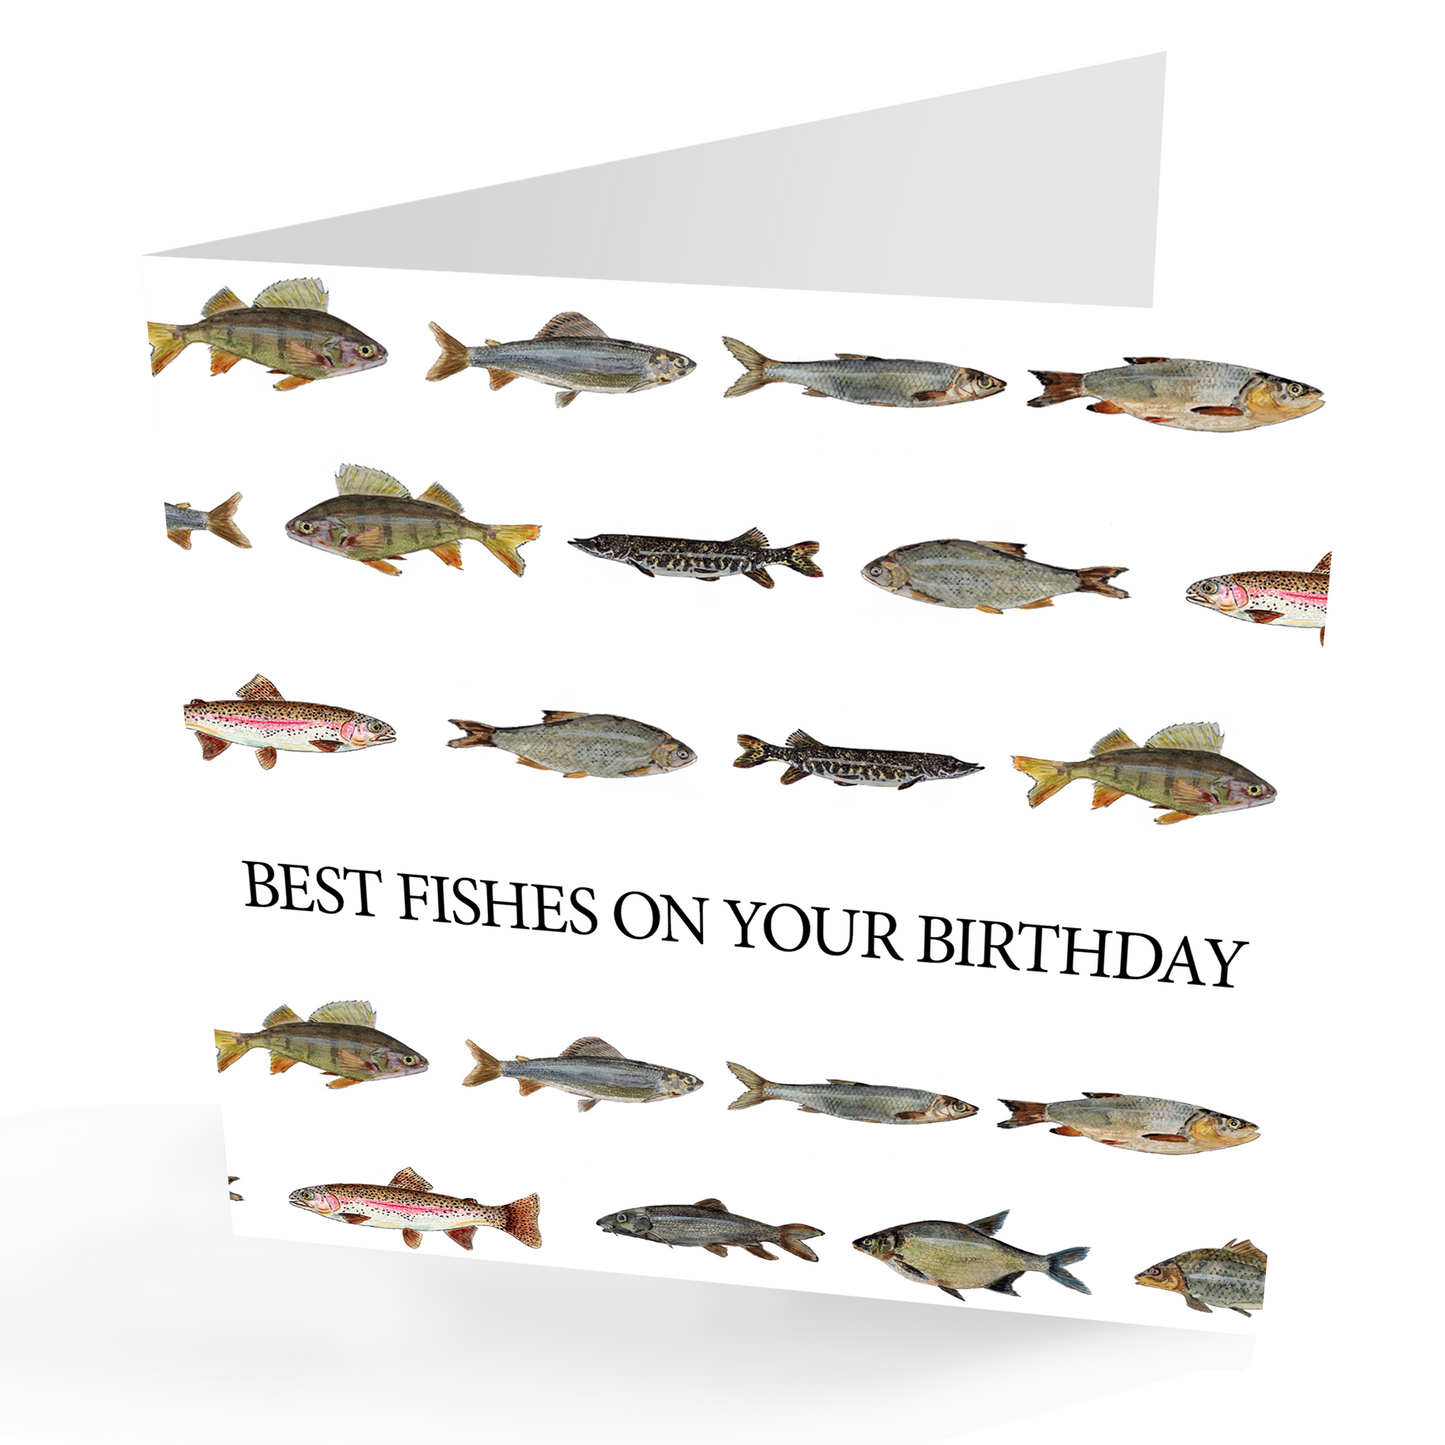 'Fishing you a Happy Birthday' Fishing Birthday Card